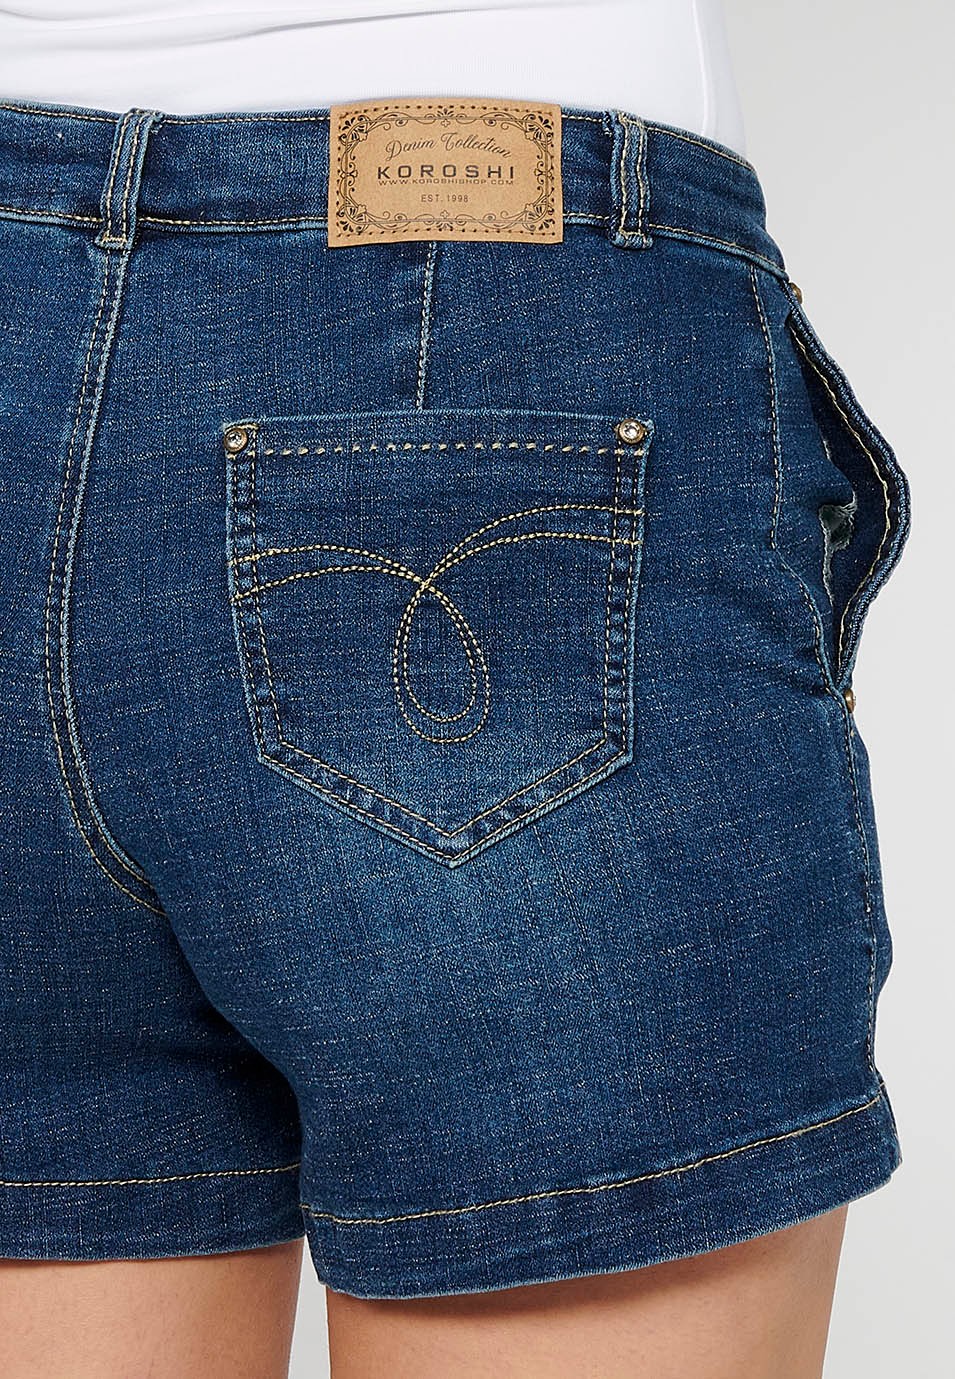 Women's Dark Blue Color Button Zipper Front Closure Flared Shorts 5